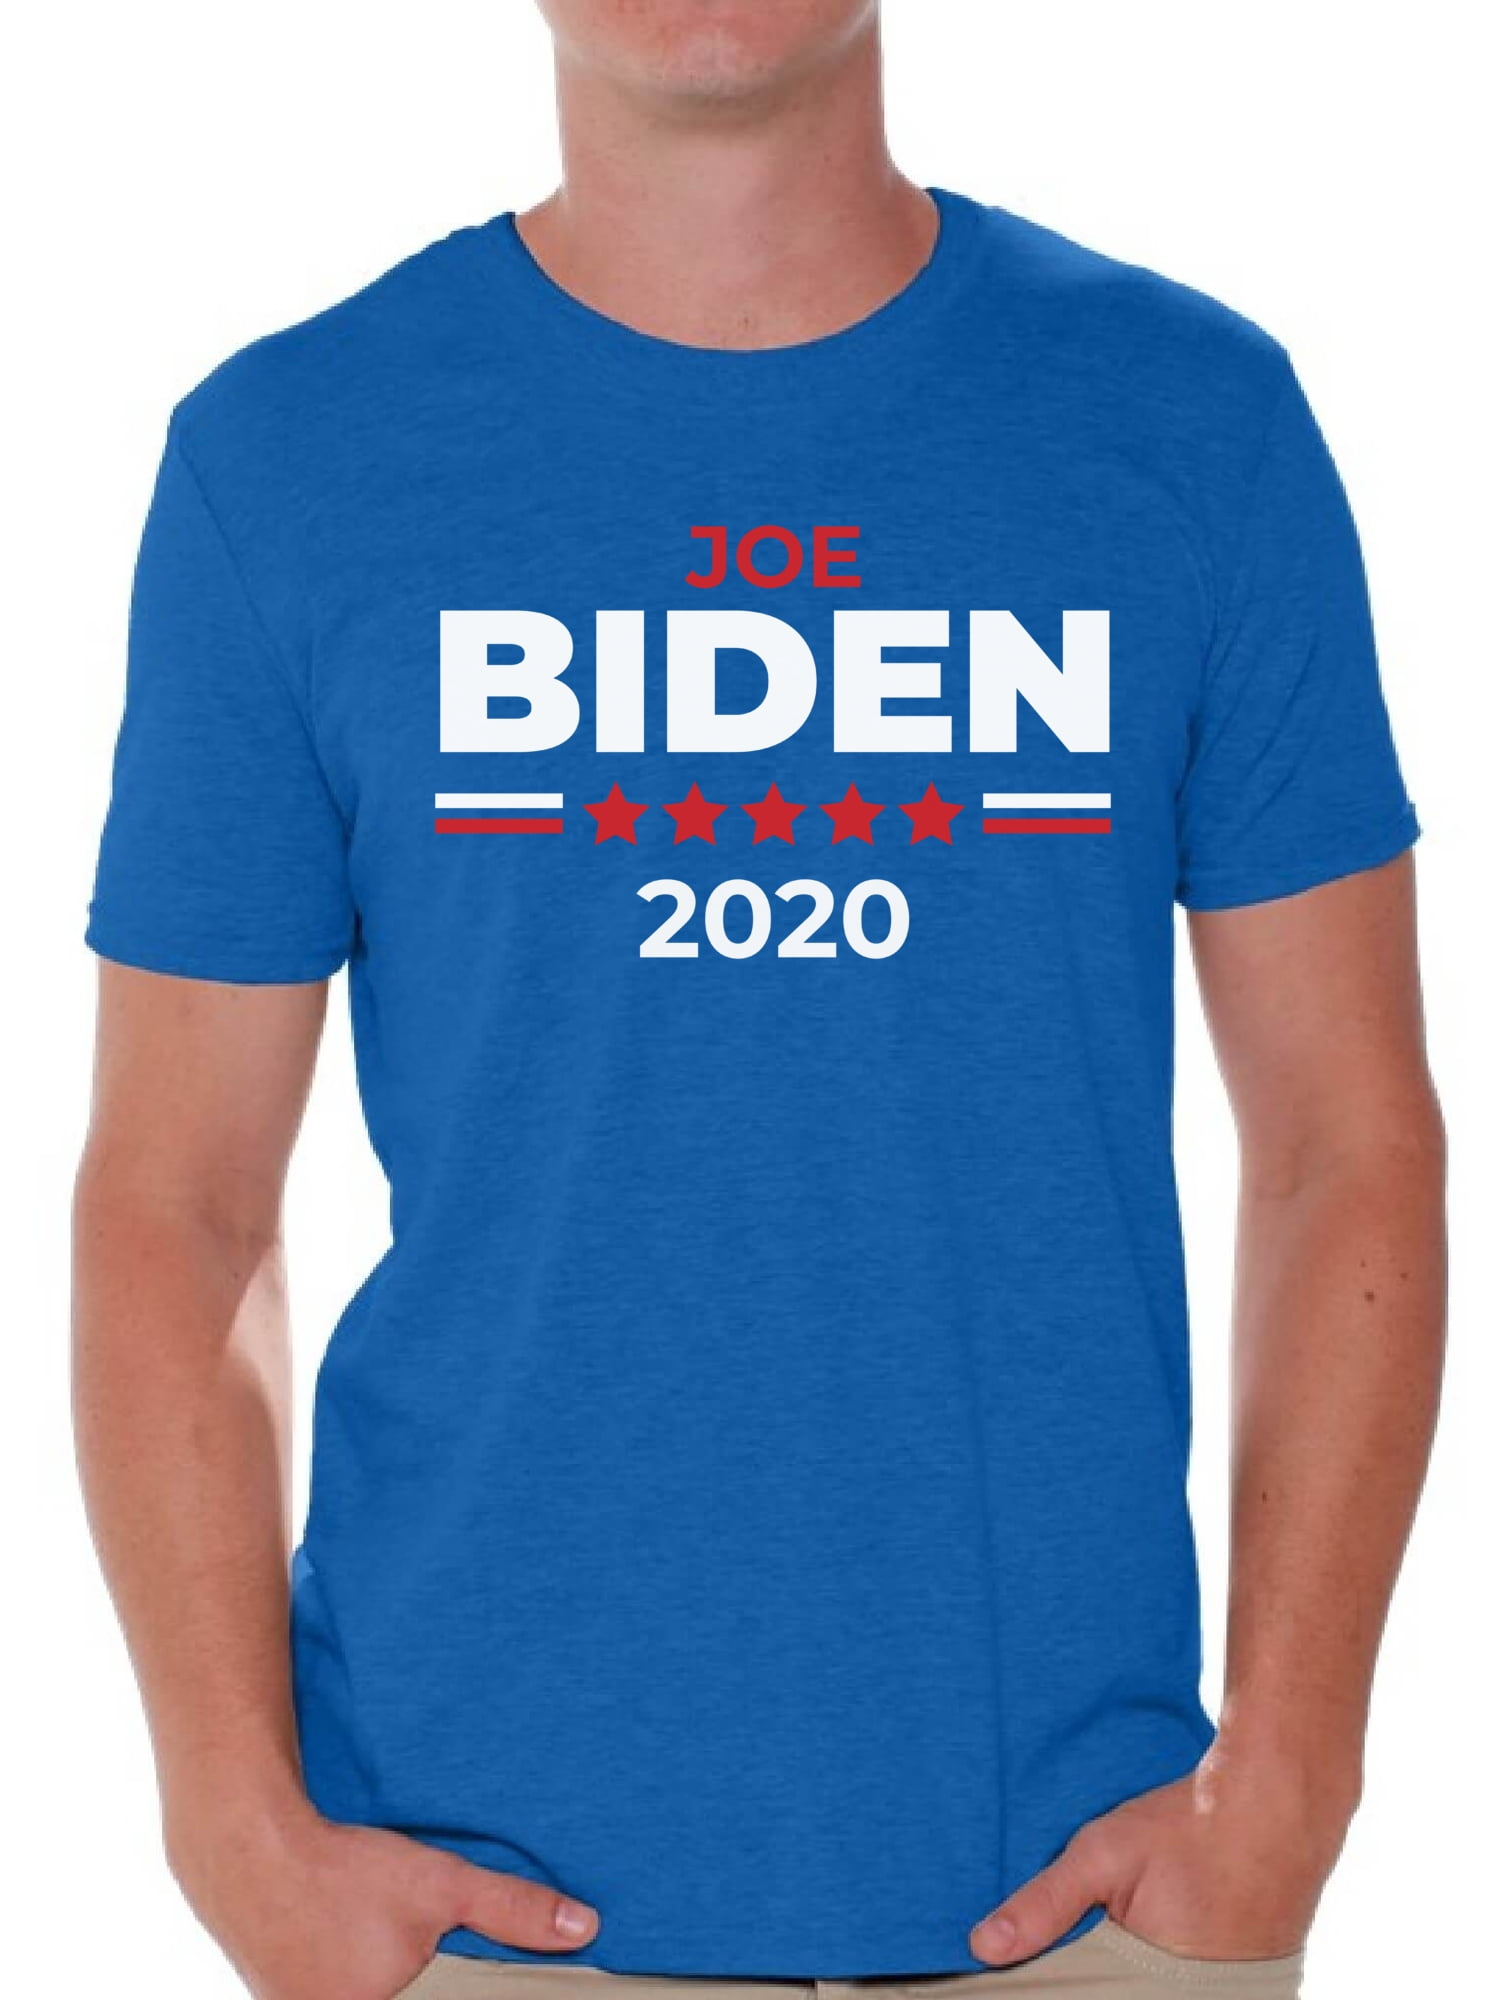 BIDEN 2020 New Men's Shirt President Campaign Political Patriotic Republican Tee 